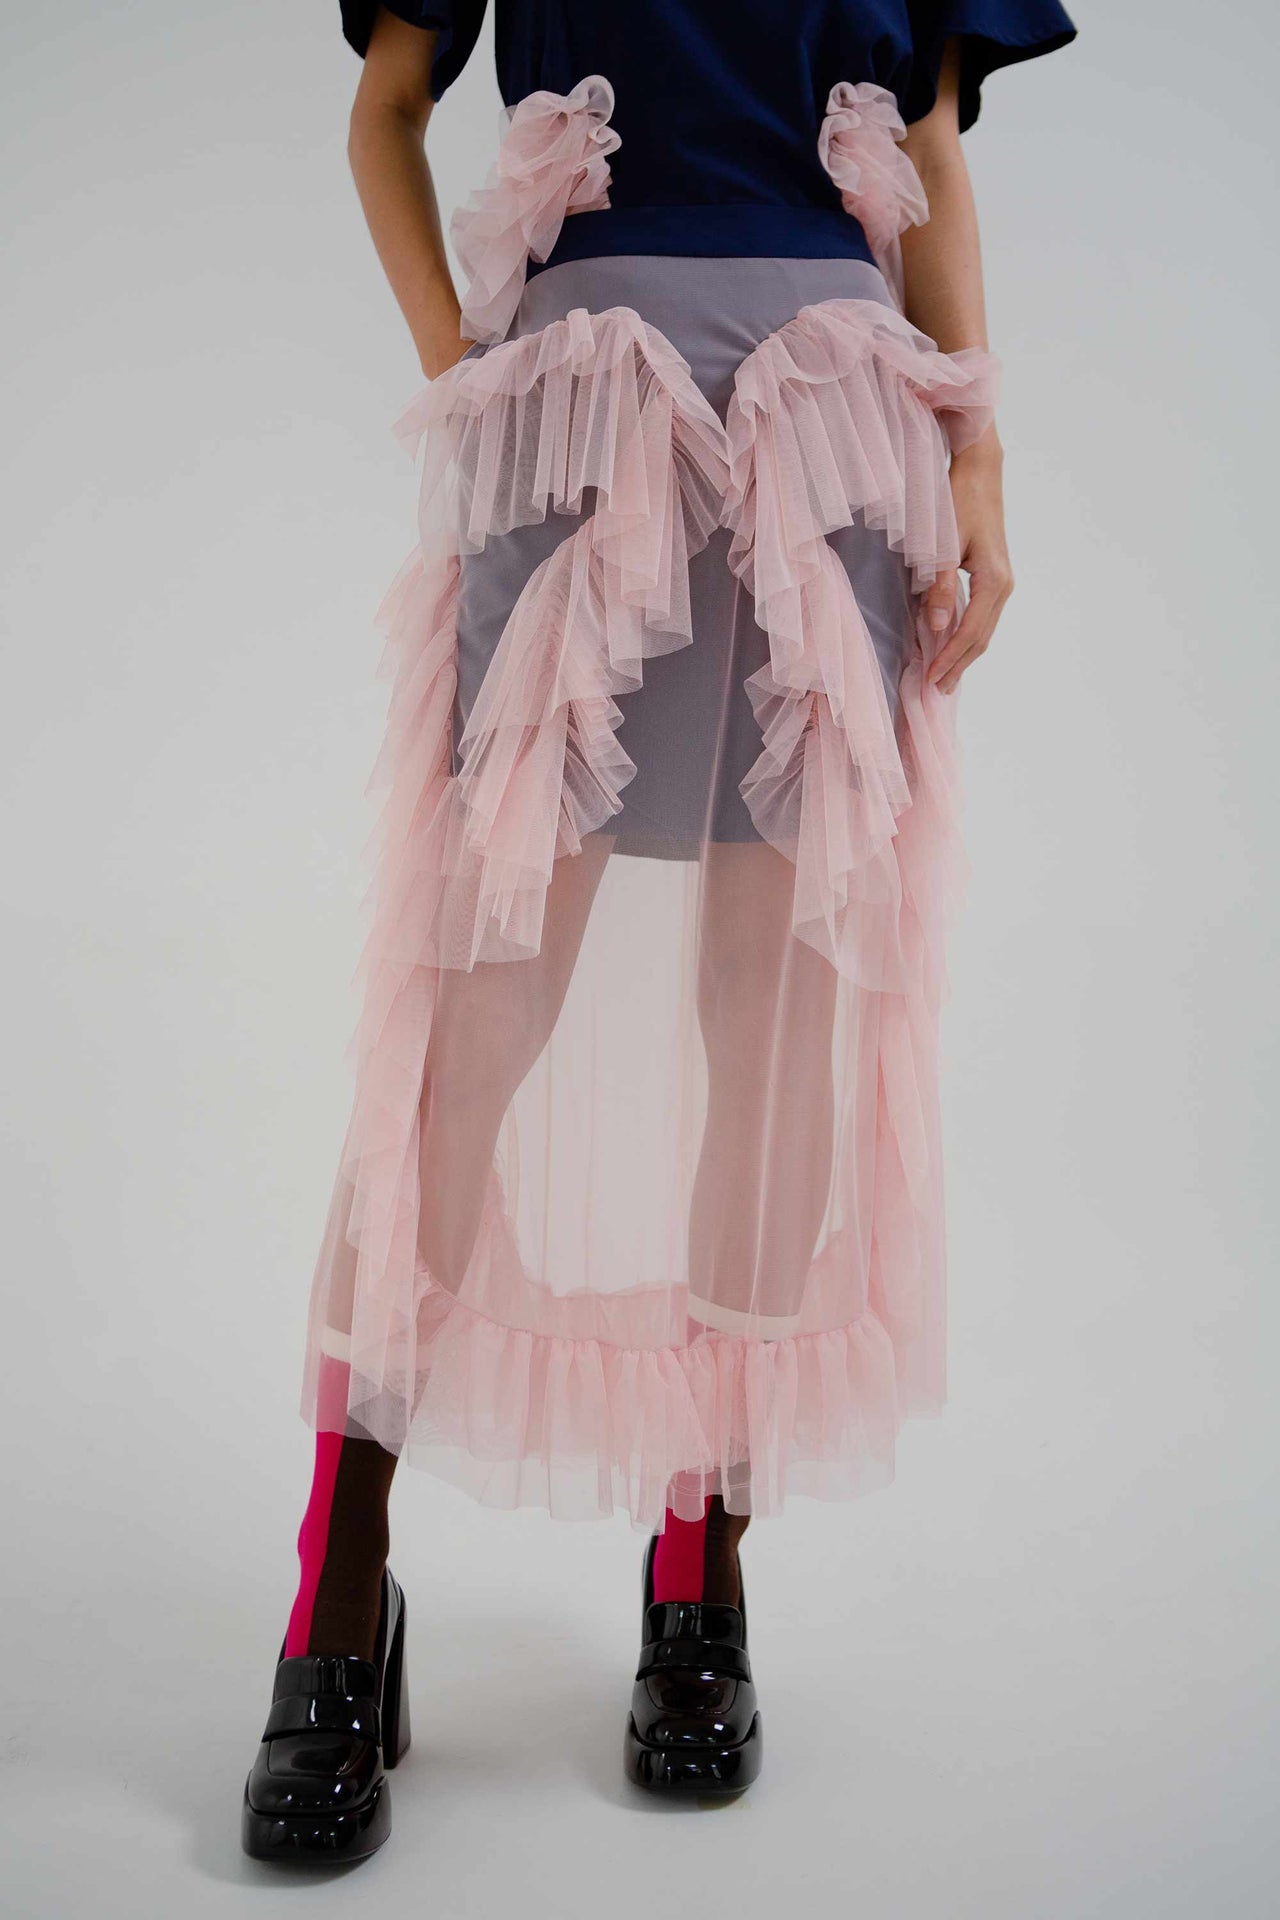 Undulating Tulle Skirt (Pink)